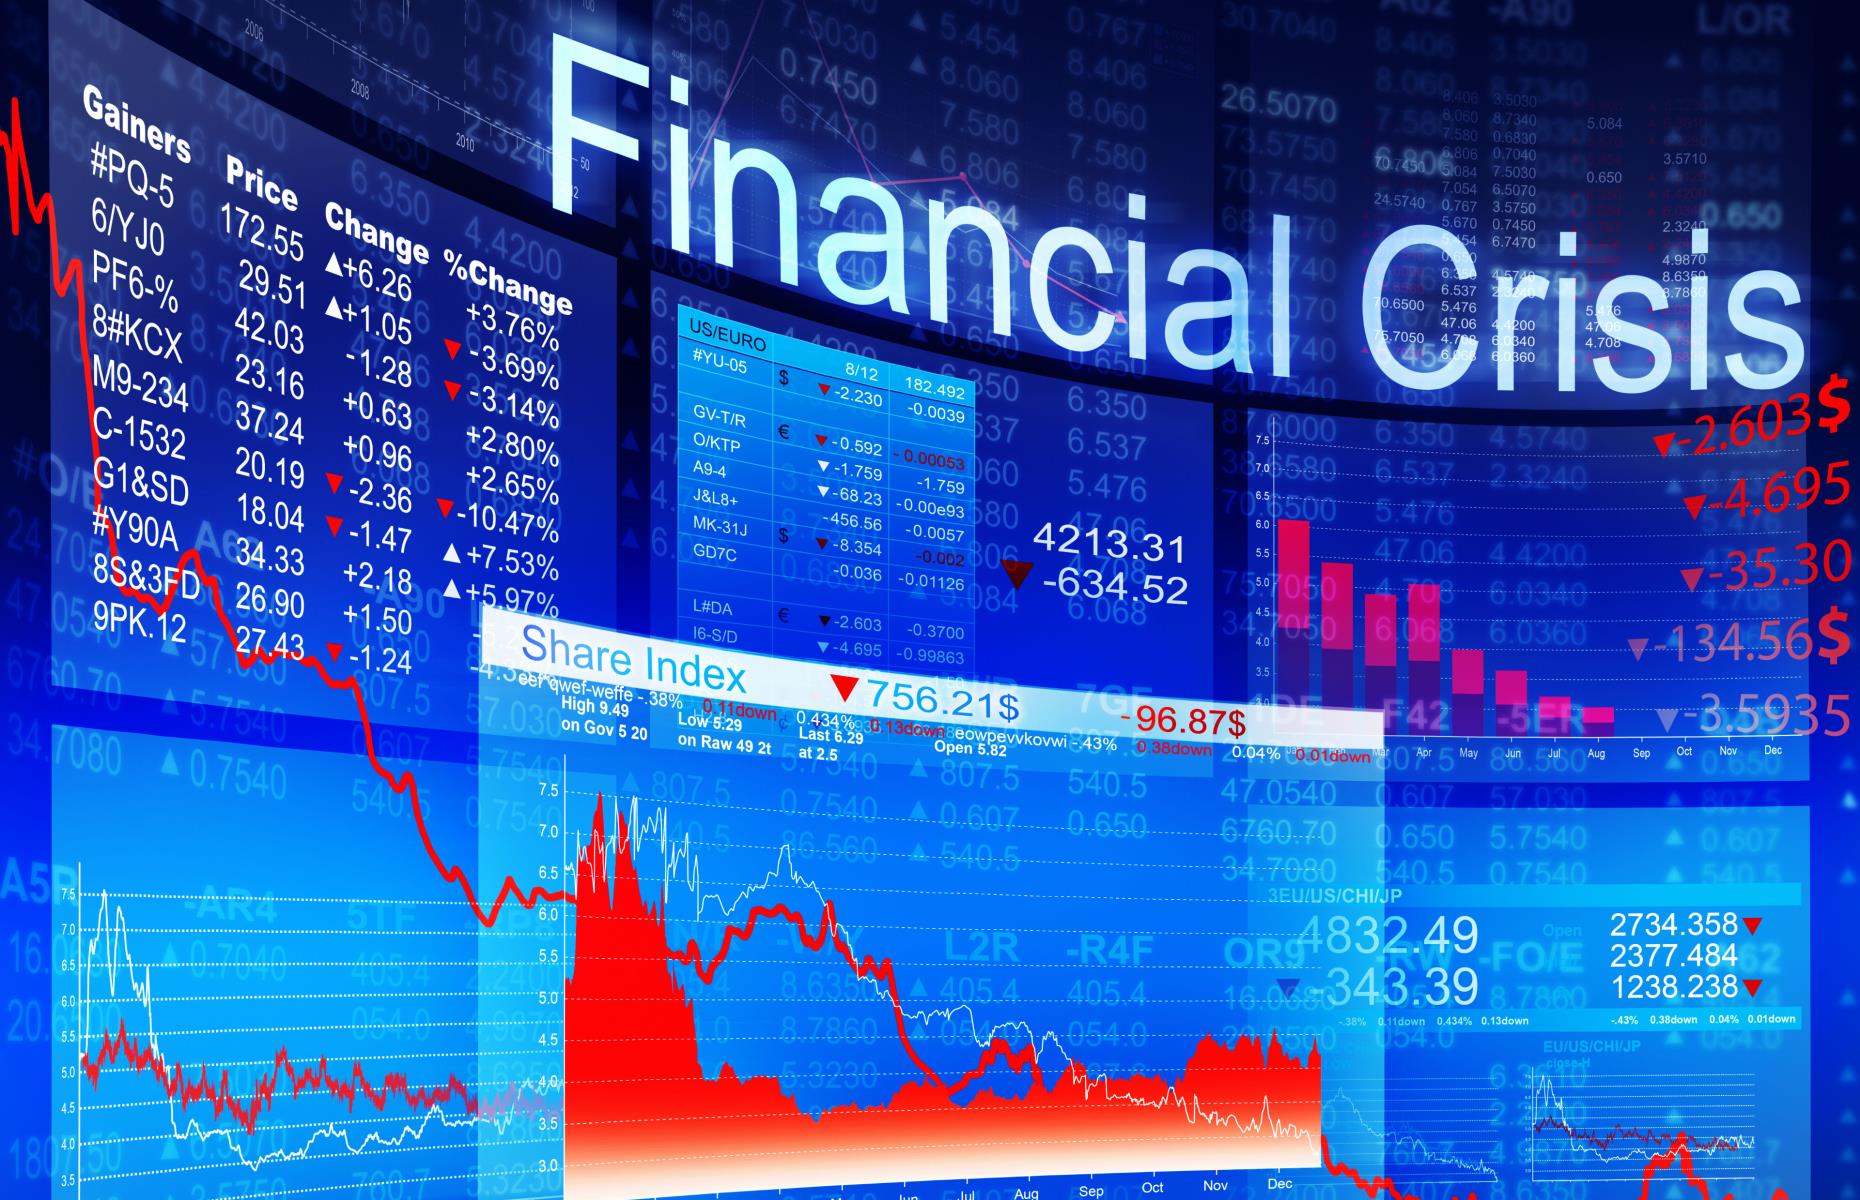 2007: Global financial crisis begins